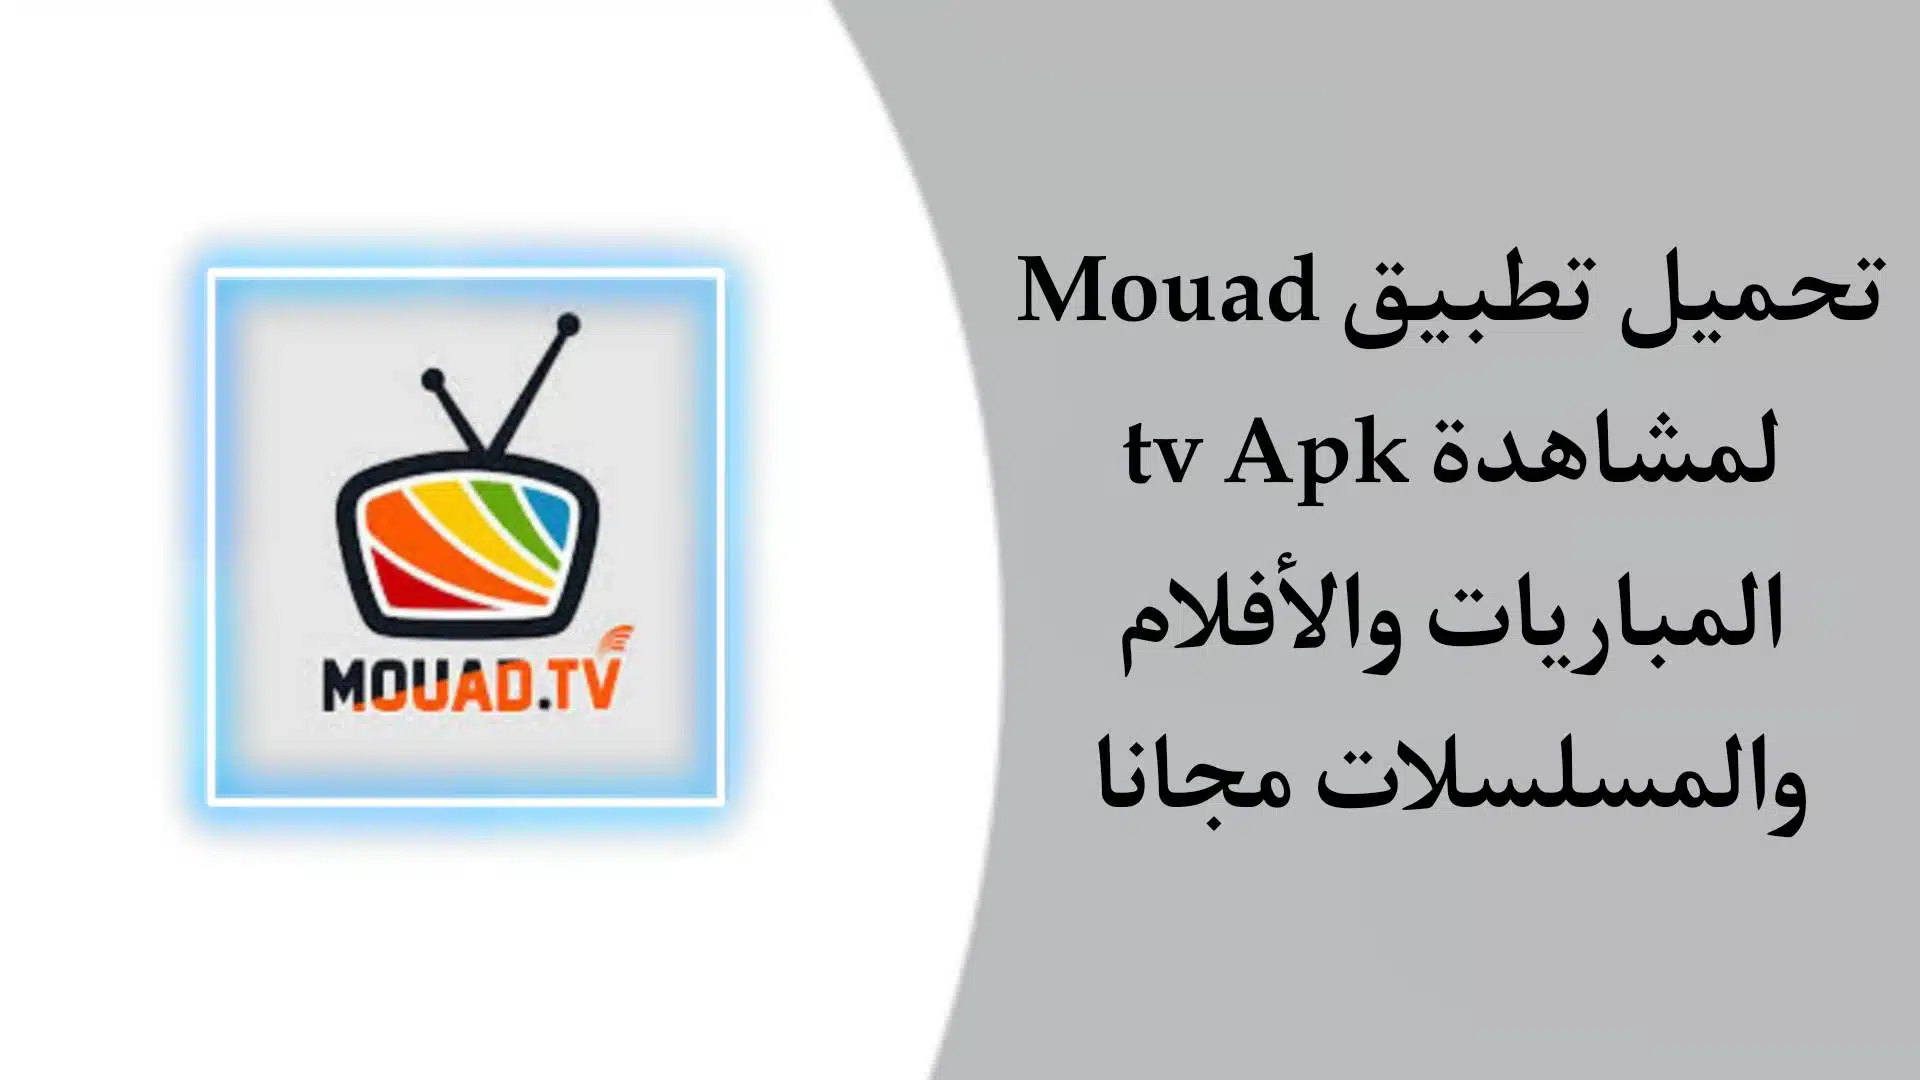 Mouad tv